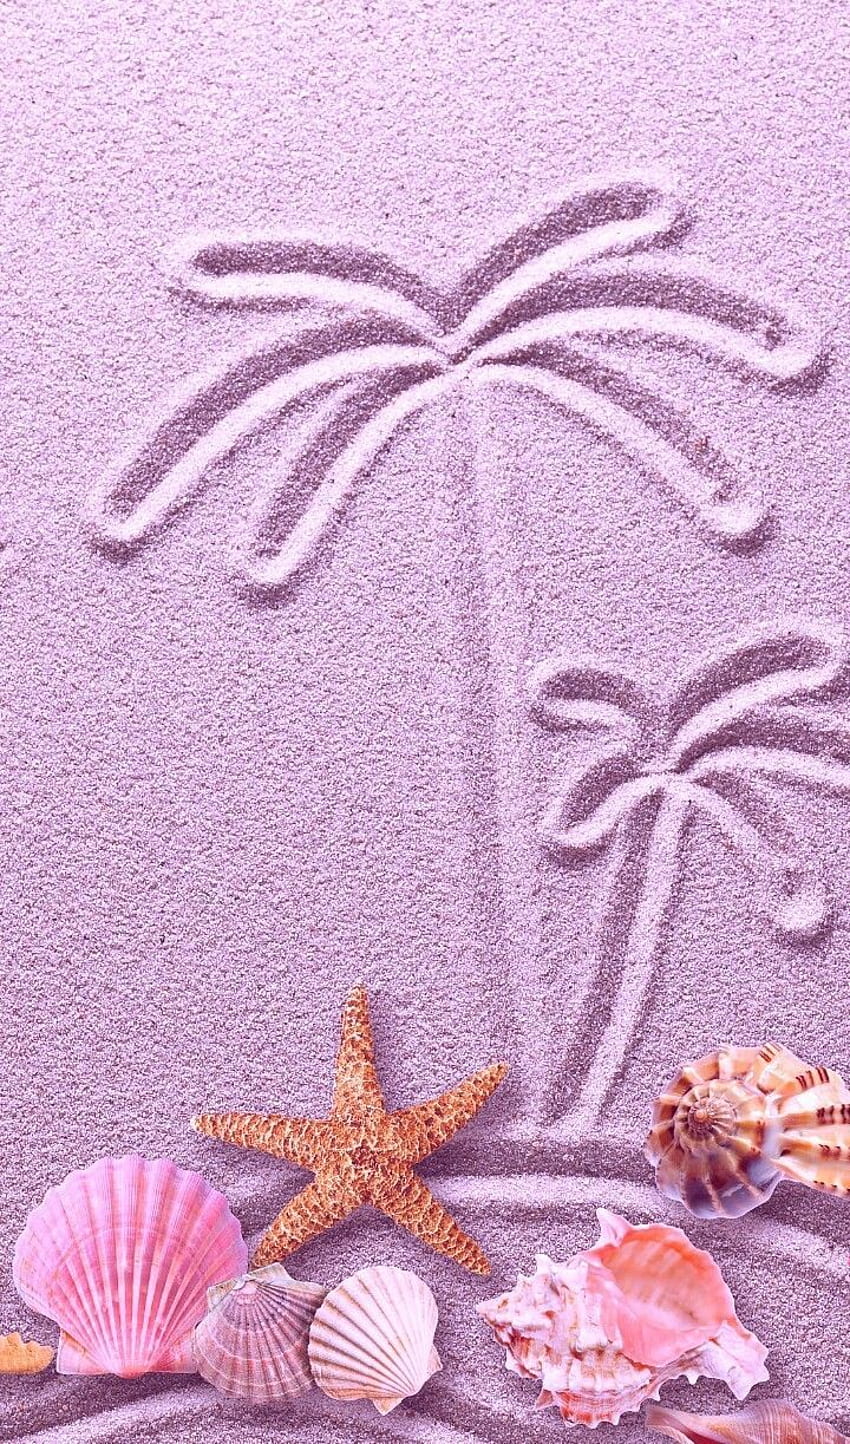 A beach scene with sand and shells - Starfish